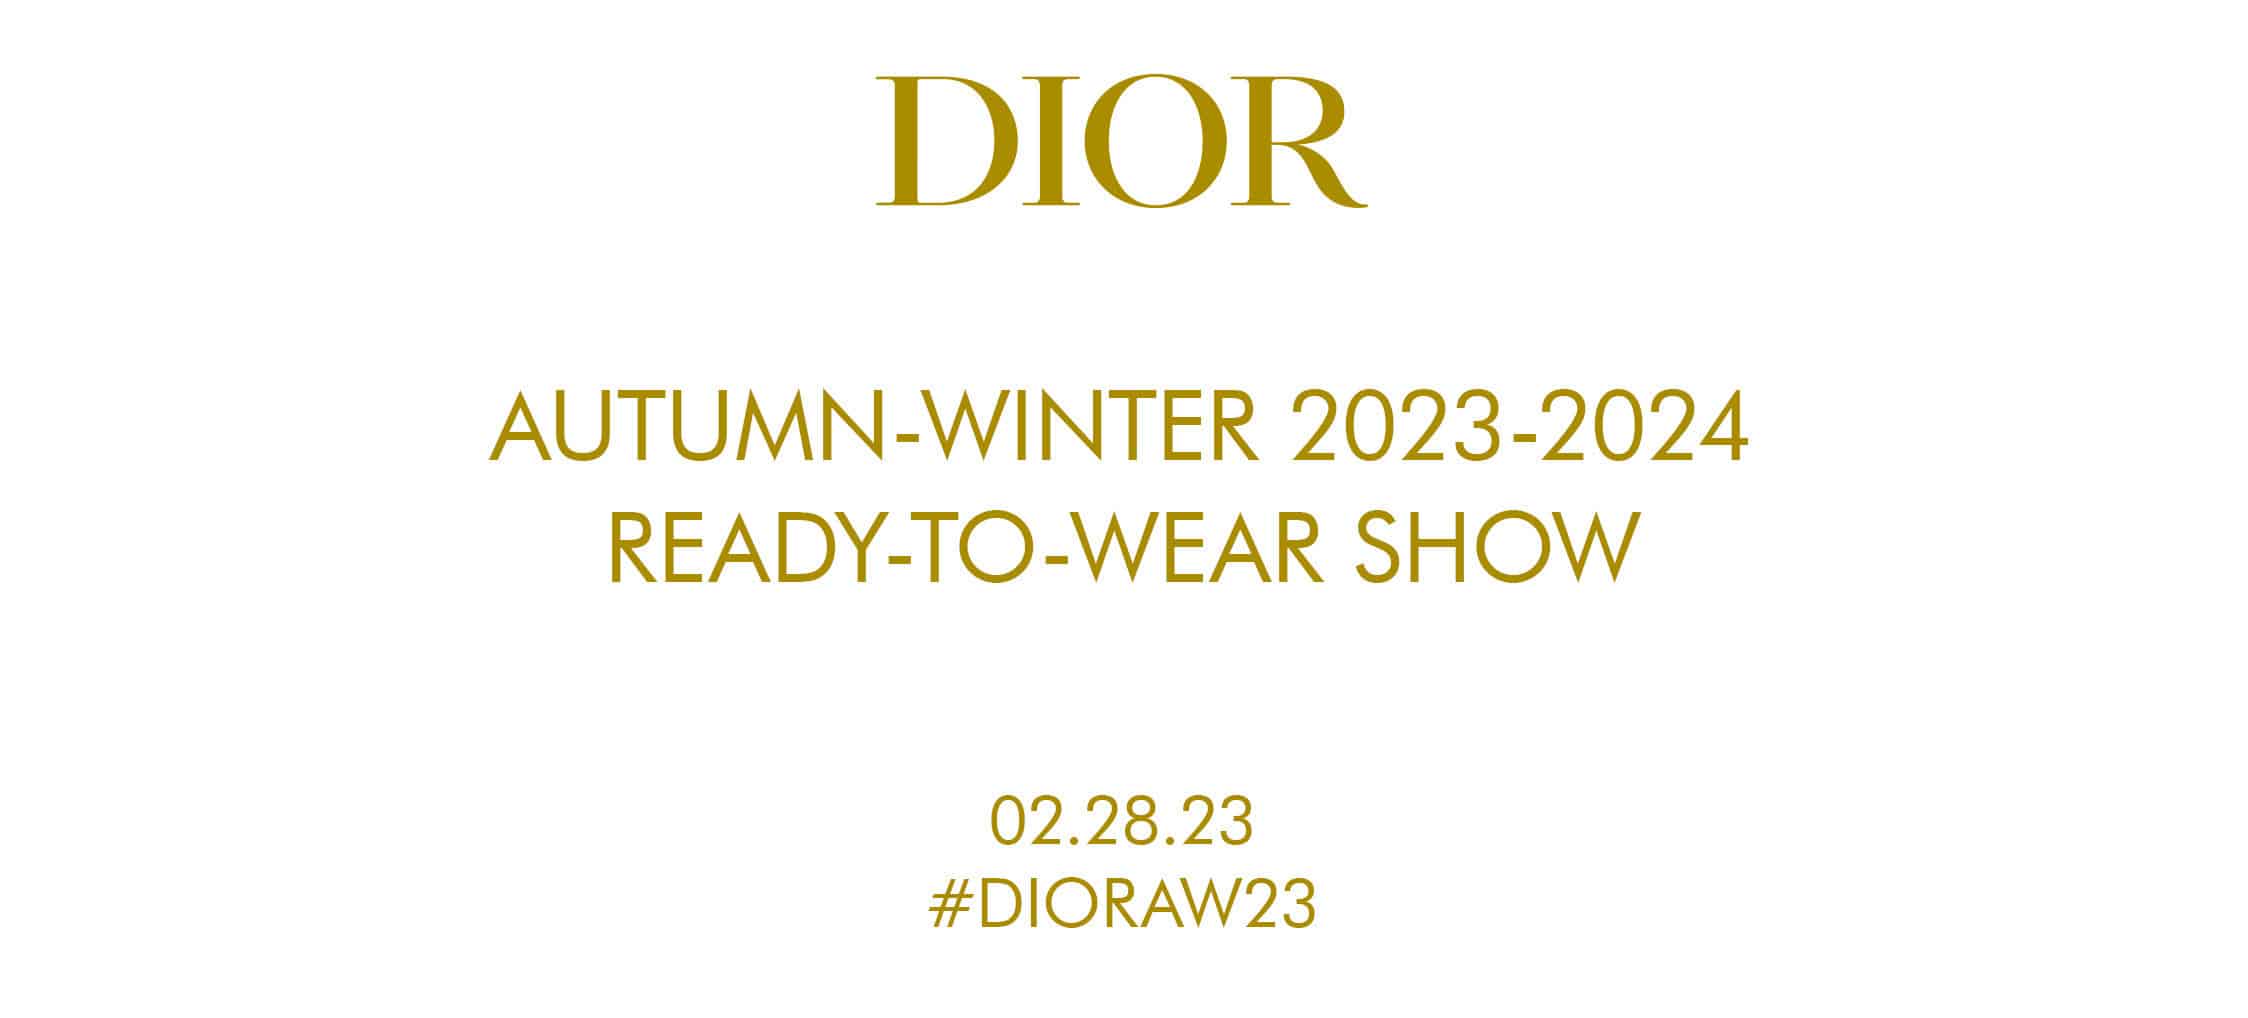 Sonam Kapoor drops glimpse of her invite from Dior Fashion Show Mumbai